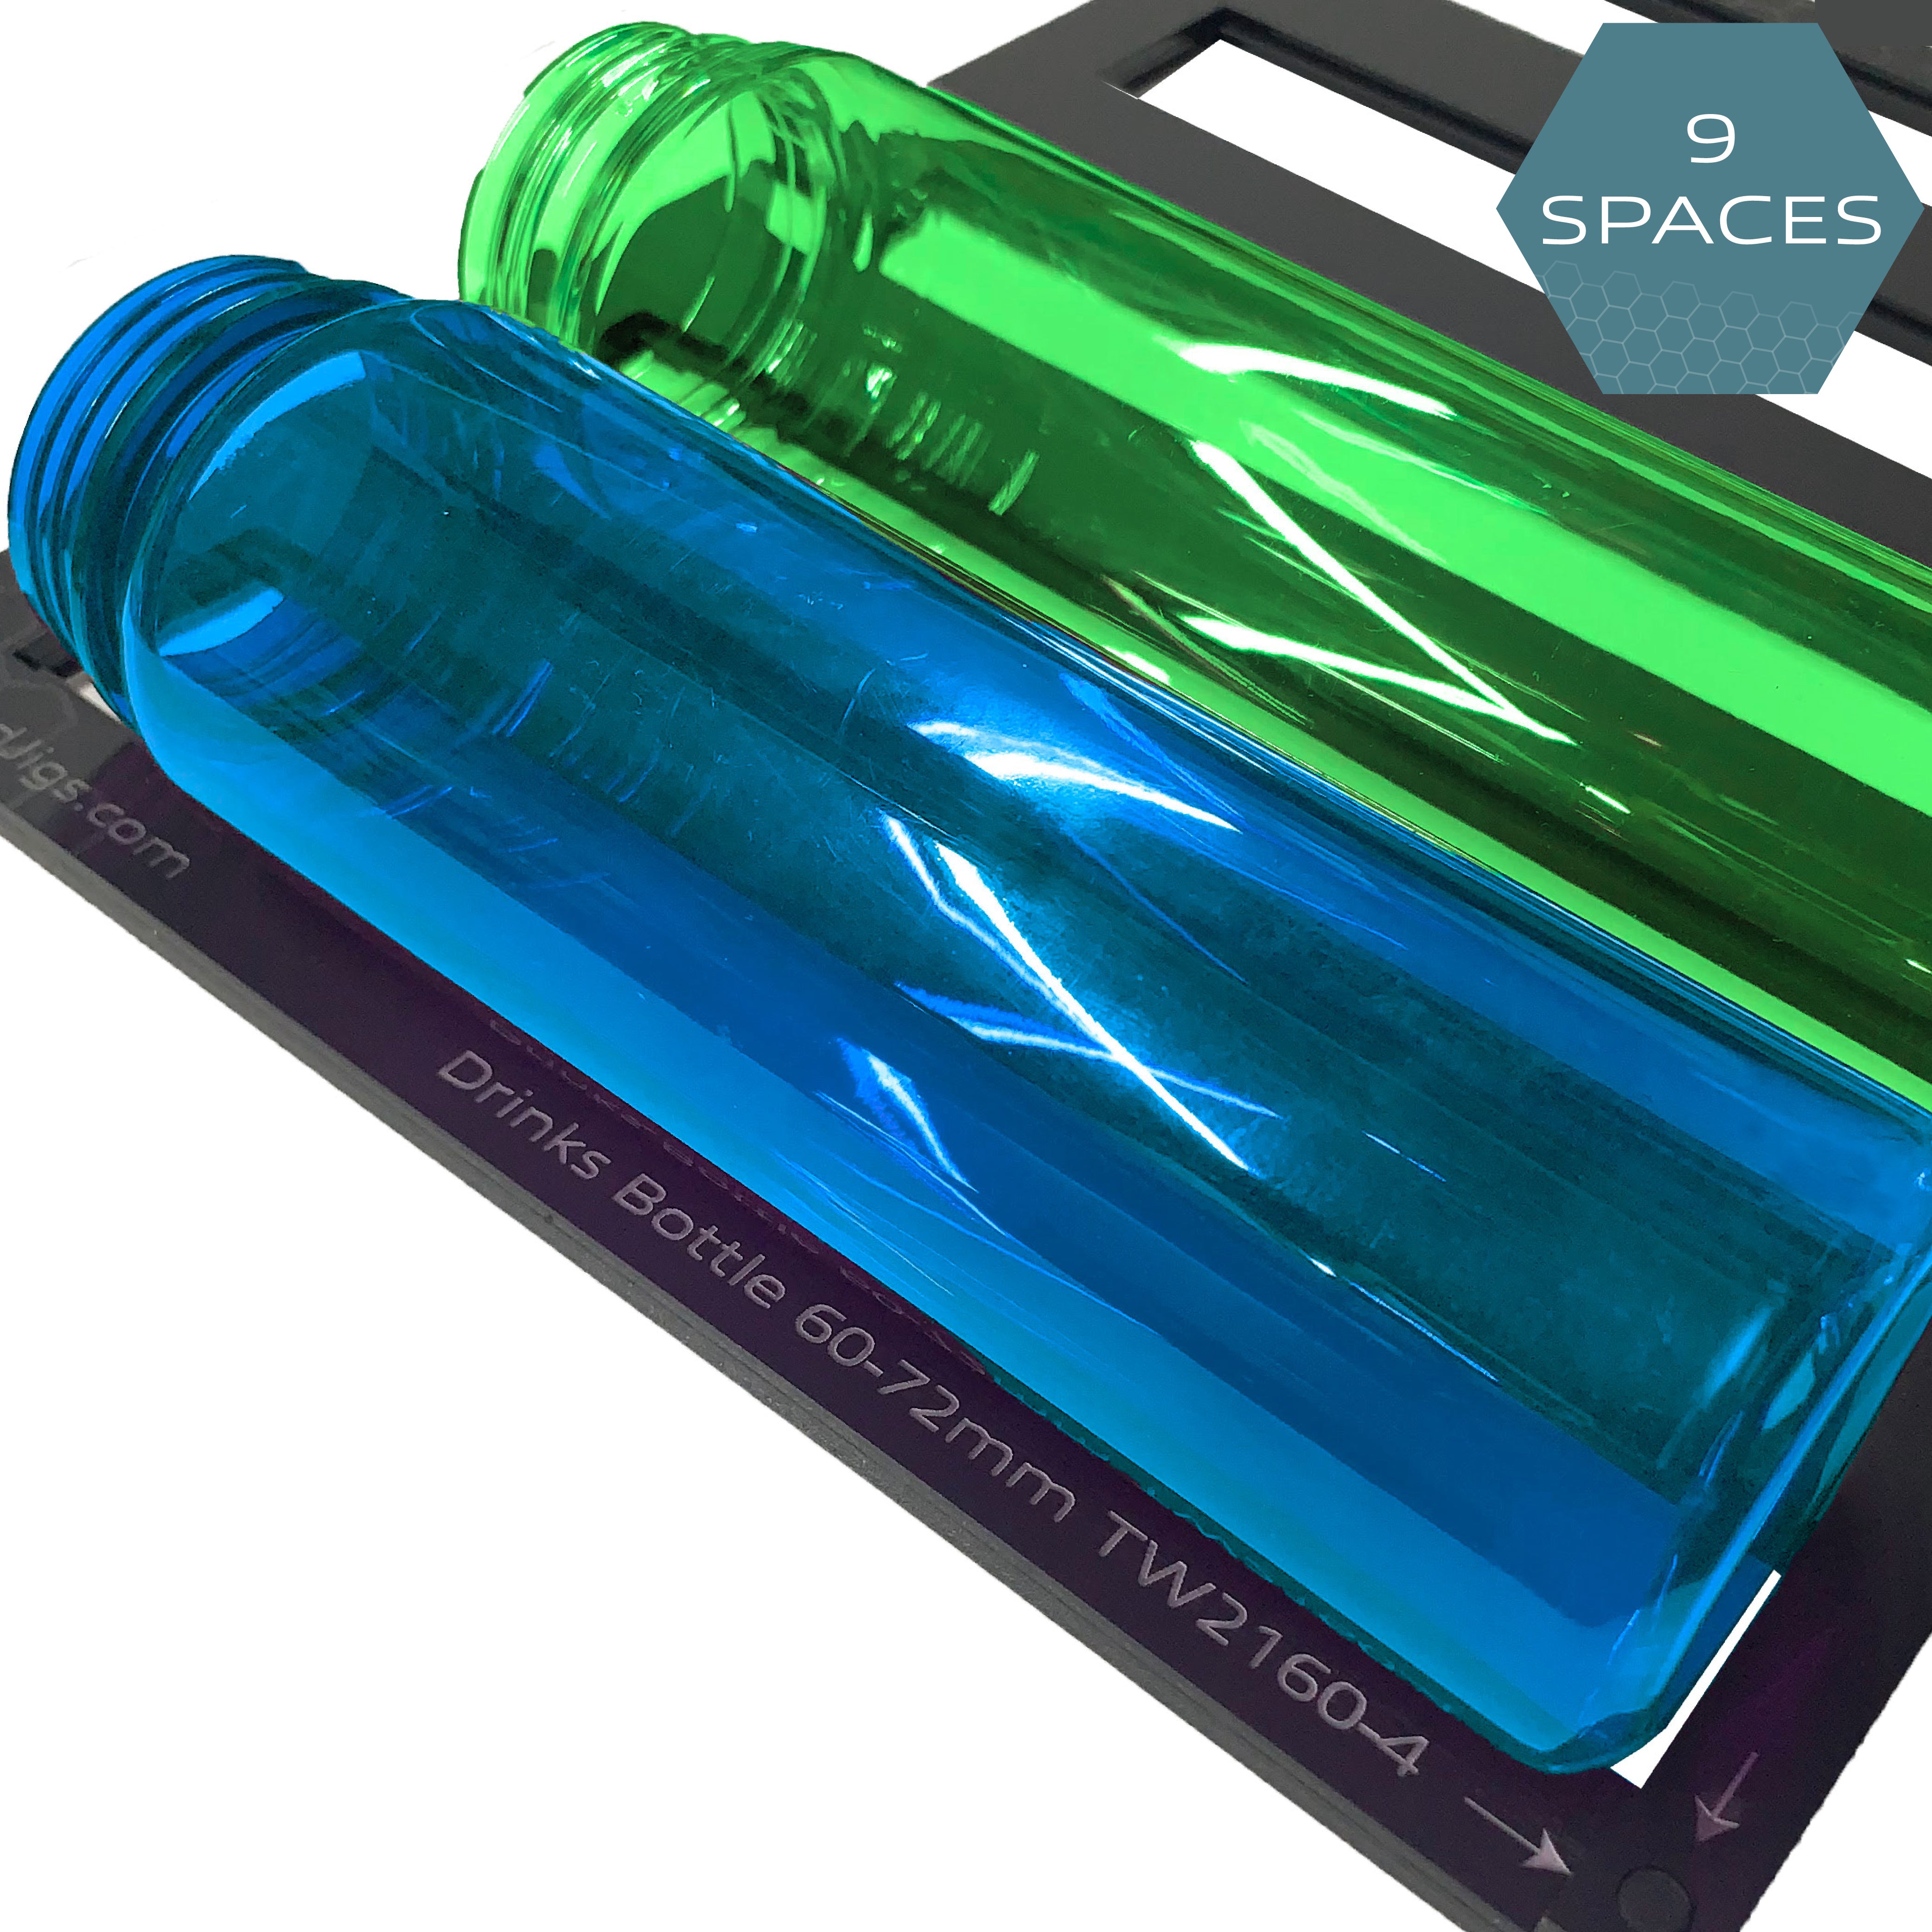 Plastic Drinks Bottle Jig for Printing Bottles - Roland LEF 300 Flatbed Printer (9 Spaces)